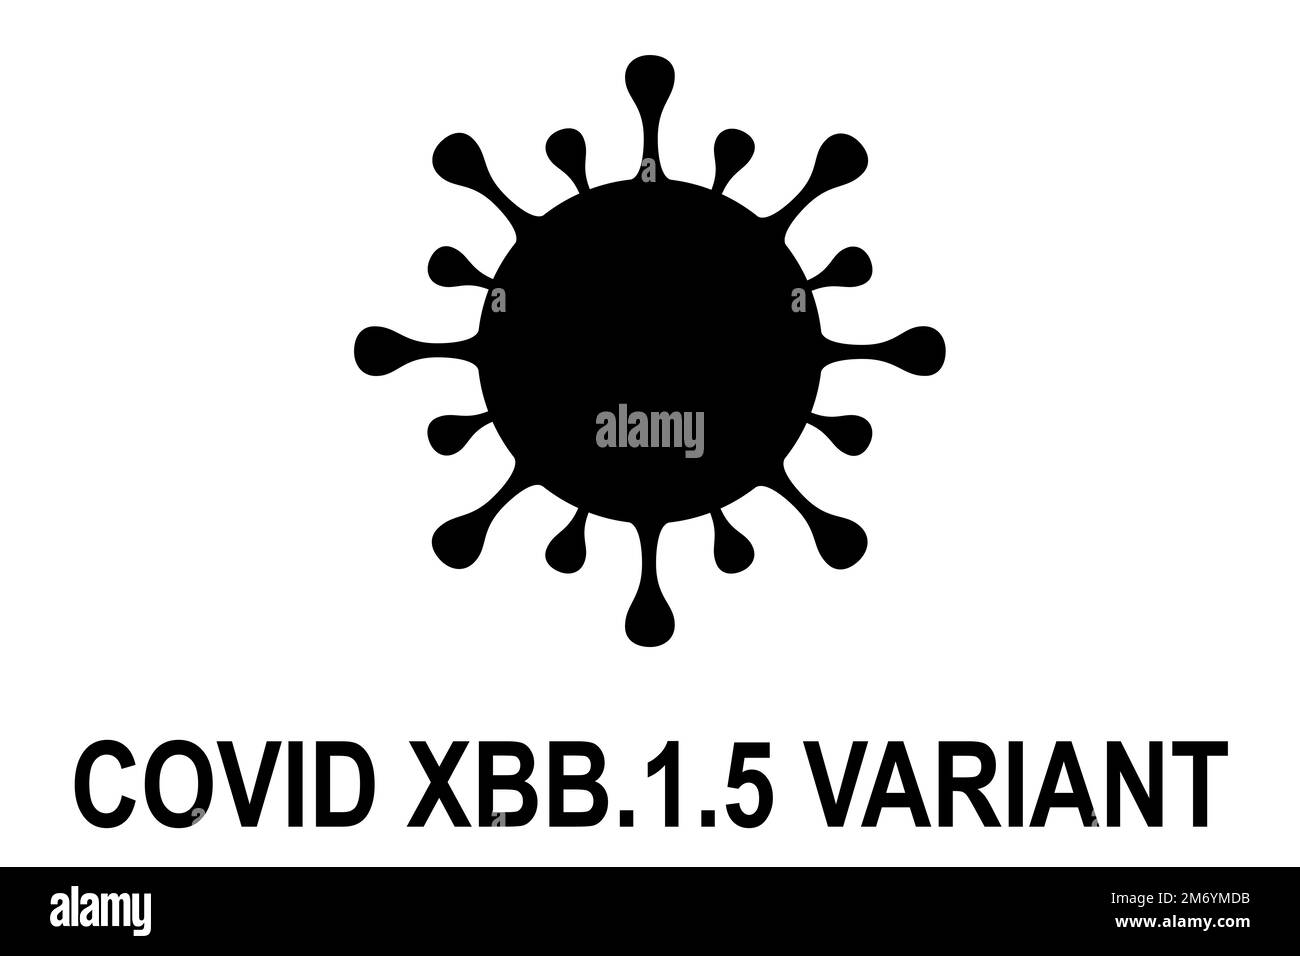 XBB.1.5. Variant Kraken. New variant of the SARS-CoV-2 coronavirus. Subvariant of Omicron. Design horizontal. Virus design and black text. Coronavirus Stock Photo